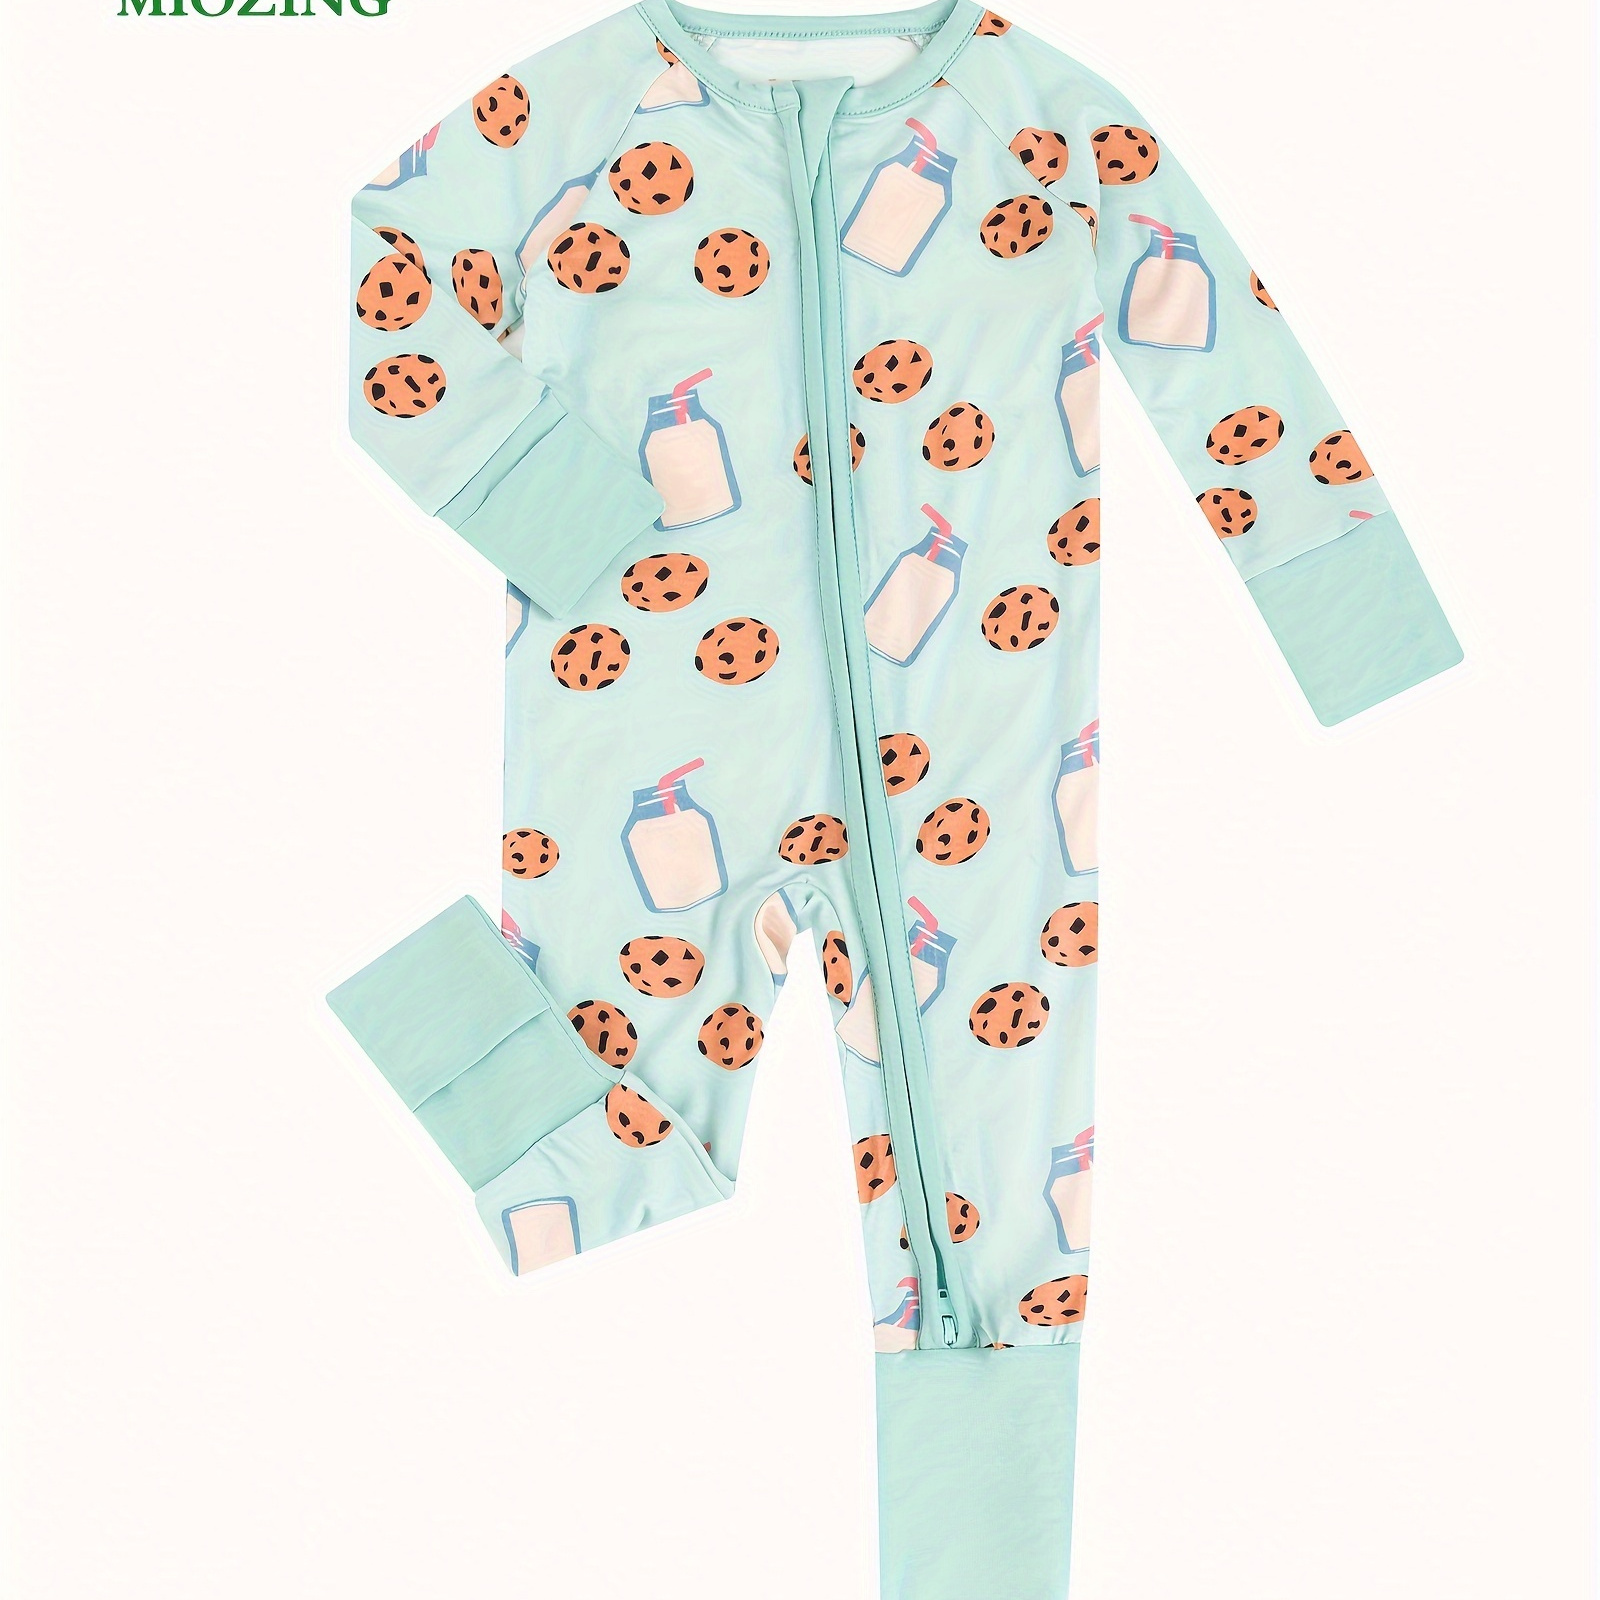 

Miozing Bamboo Fiber Bodysuit For Baby, Milk & Biscuit Cartoon Pattern Long Sleeve Onesie, Infant & Toddler Girl's Romper